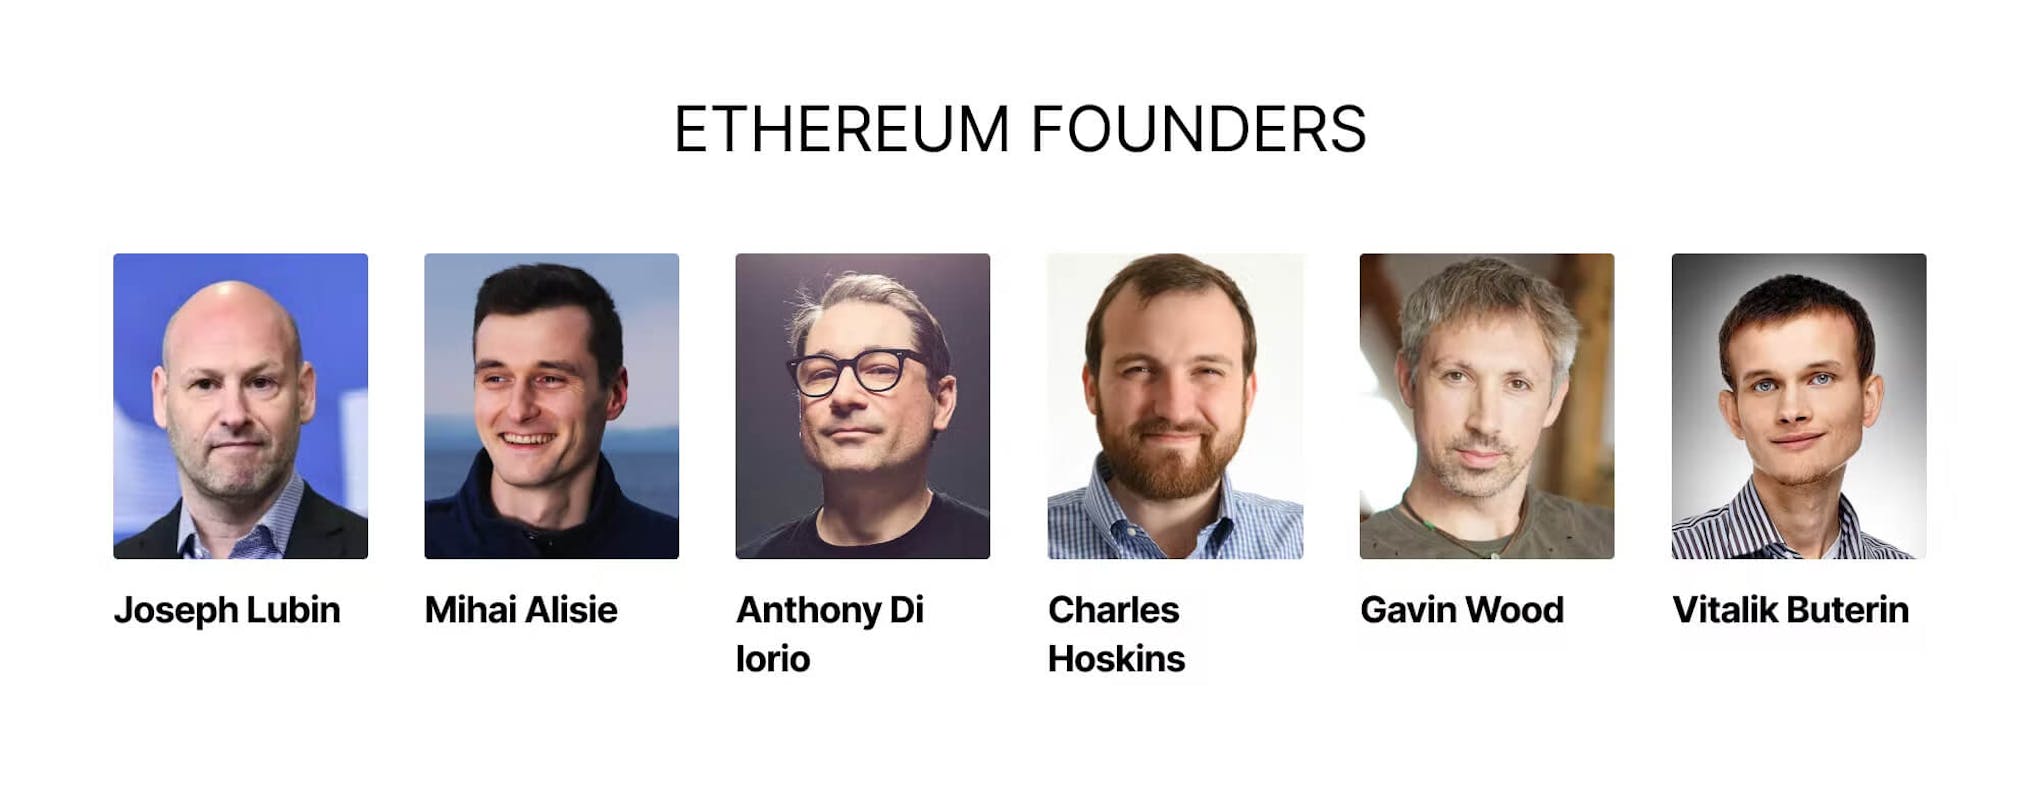 Ethereum Founders.